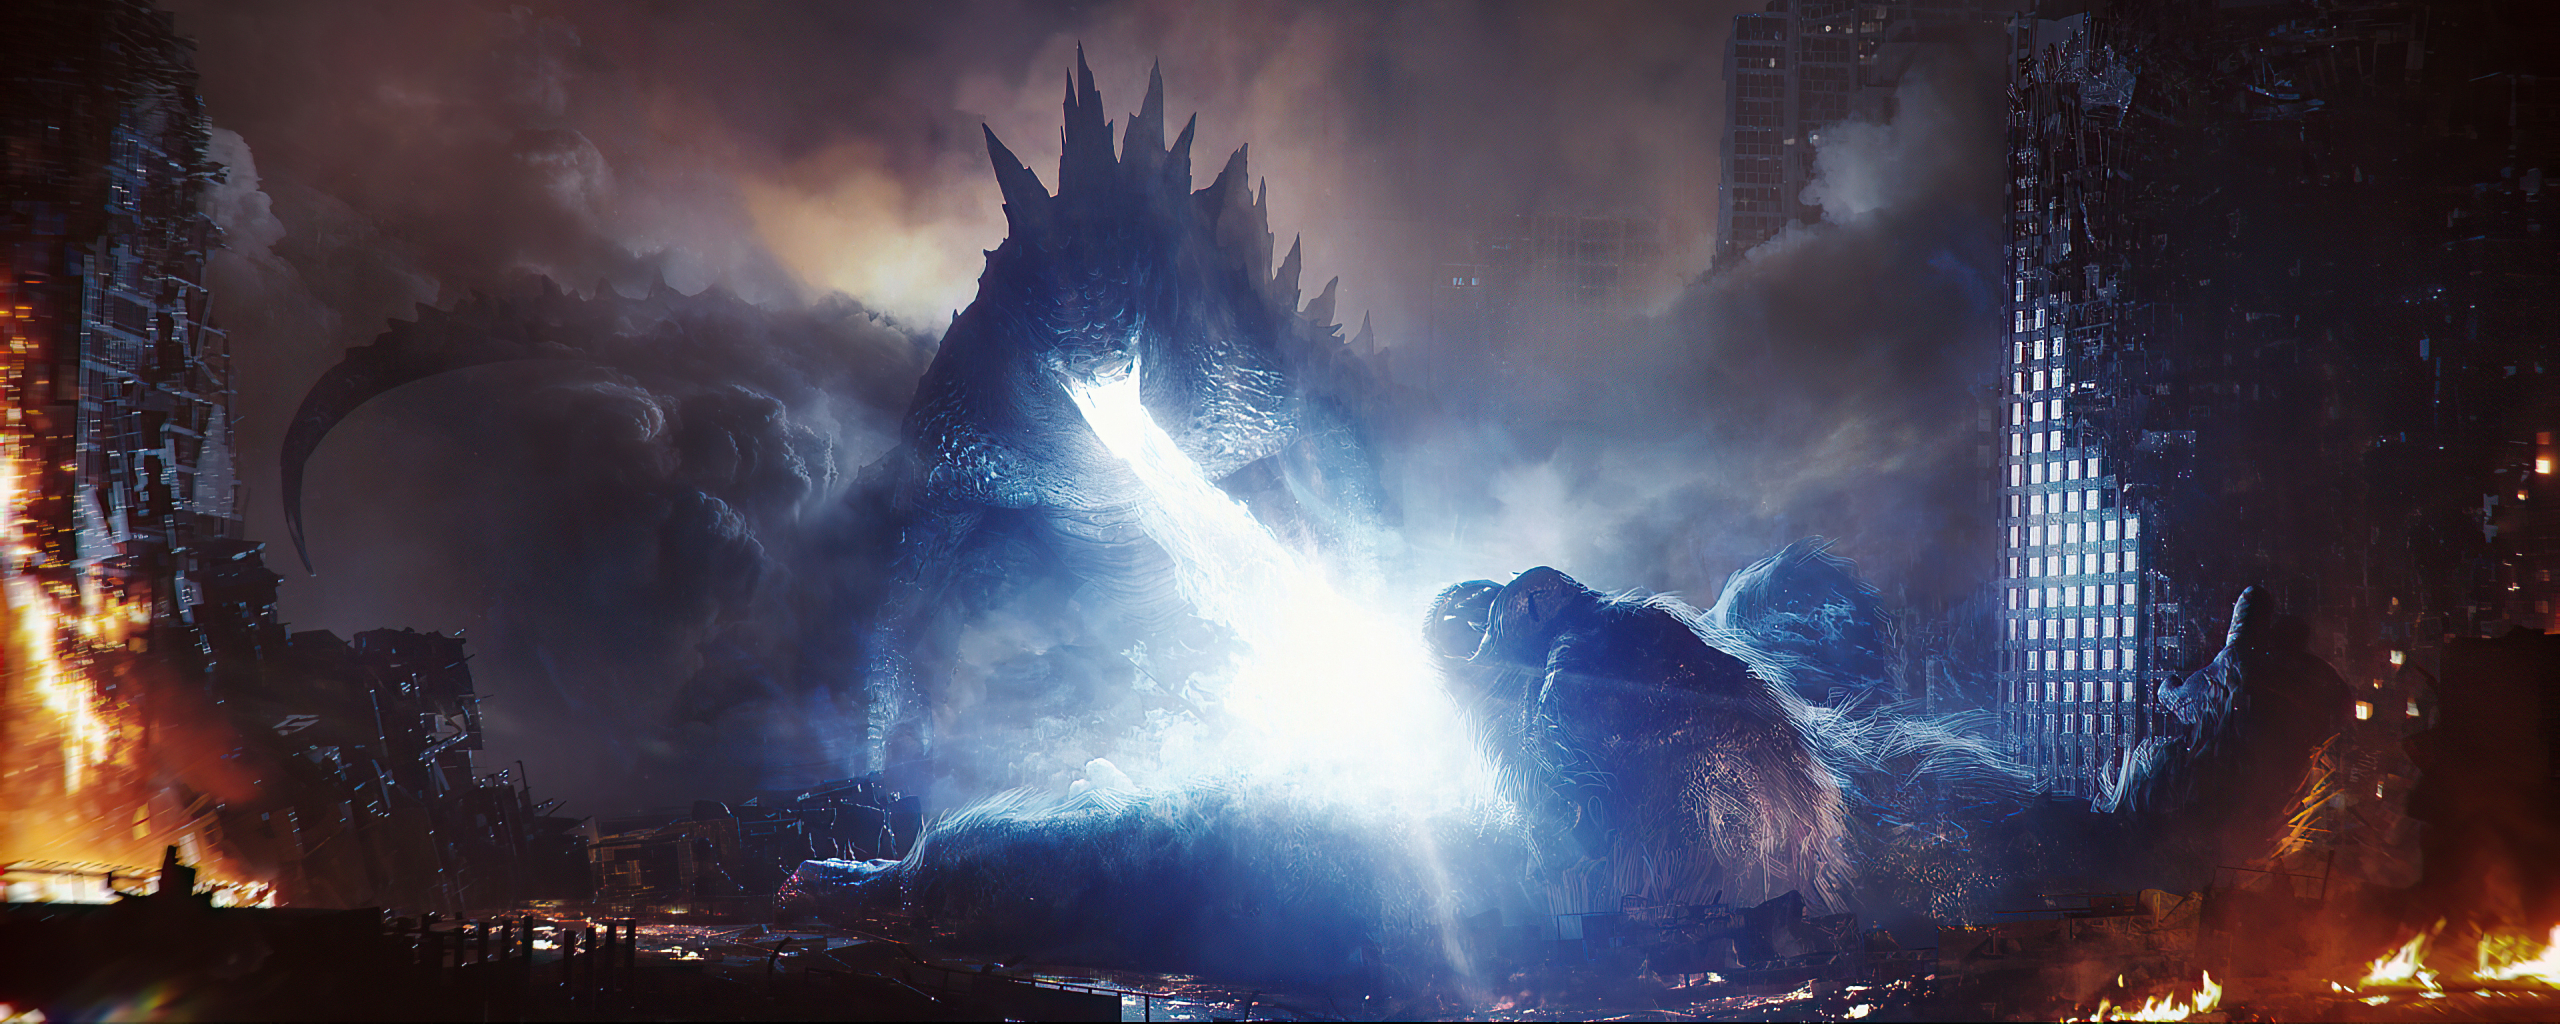 2560x1024 Godzilla Vs Kong 2021 FanArt 2560x1024 ...